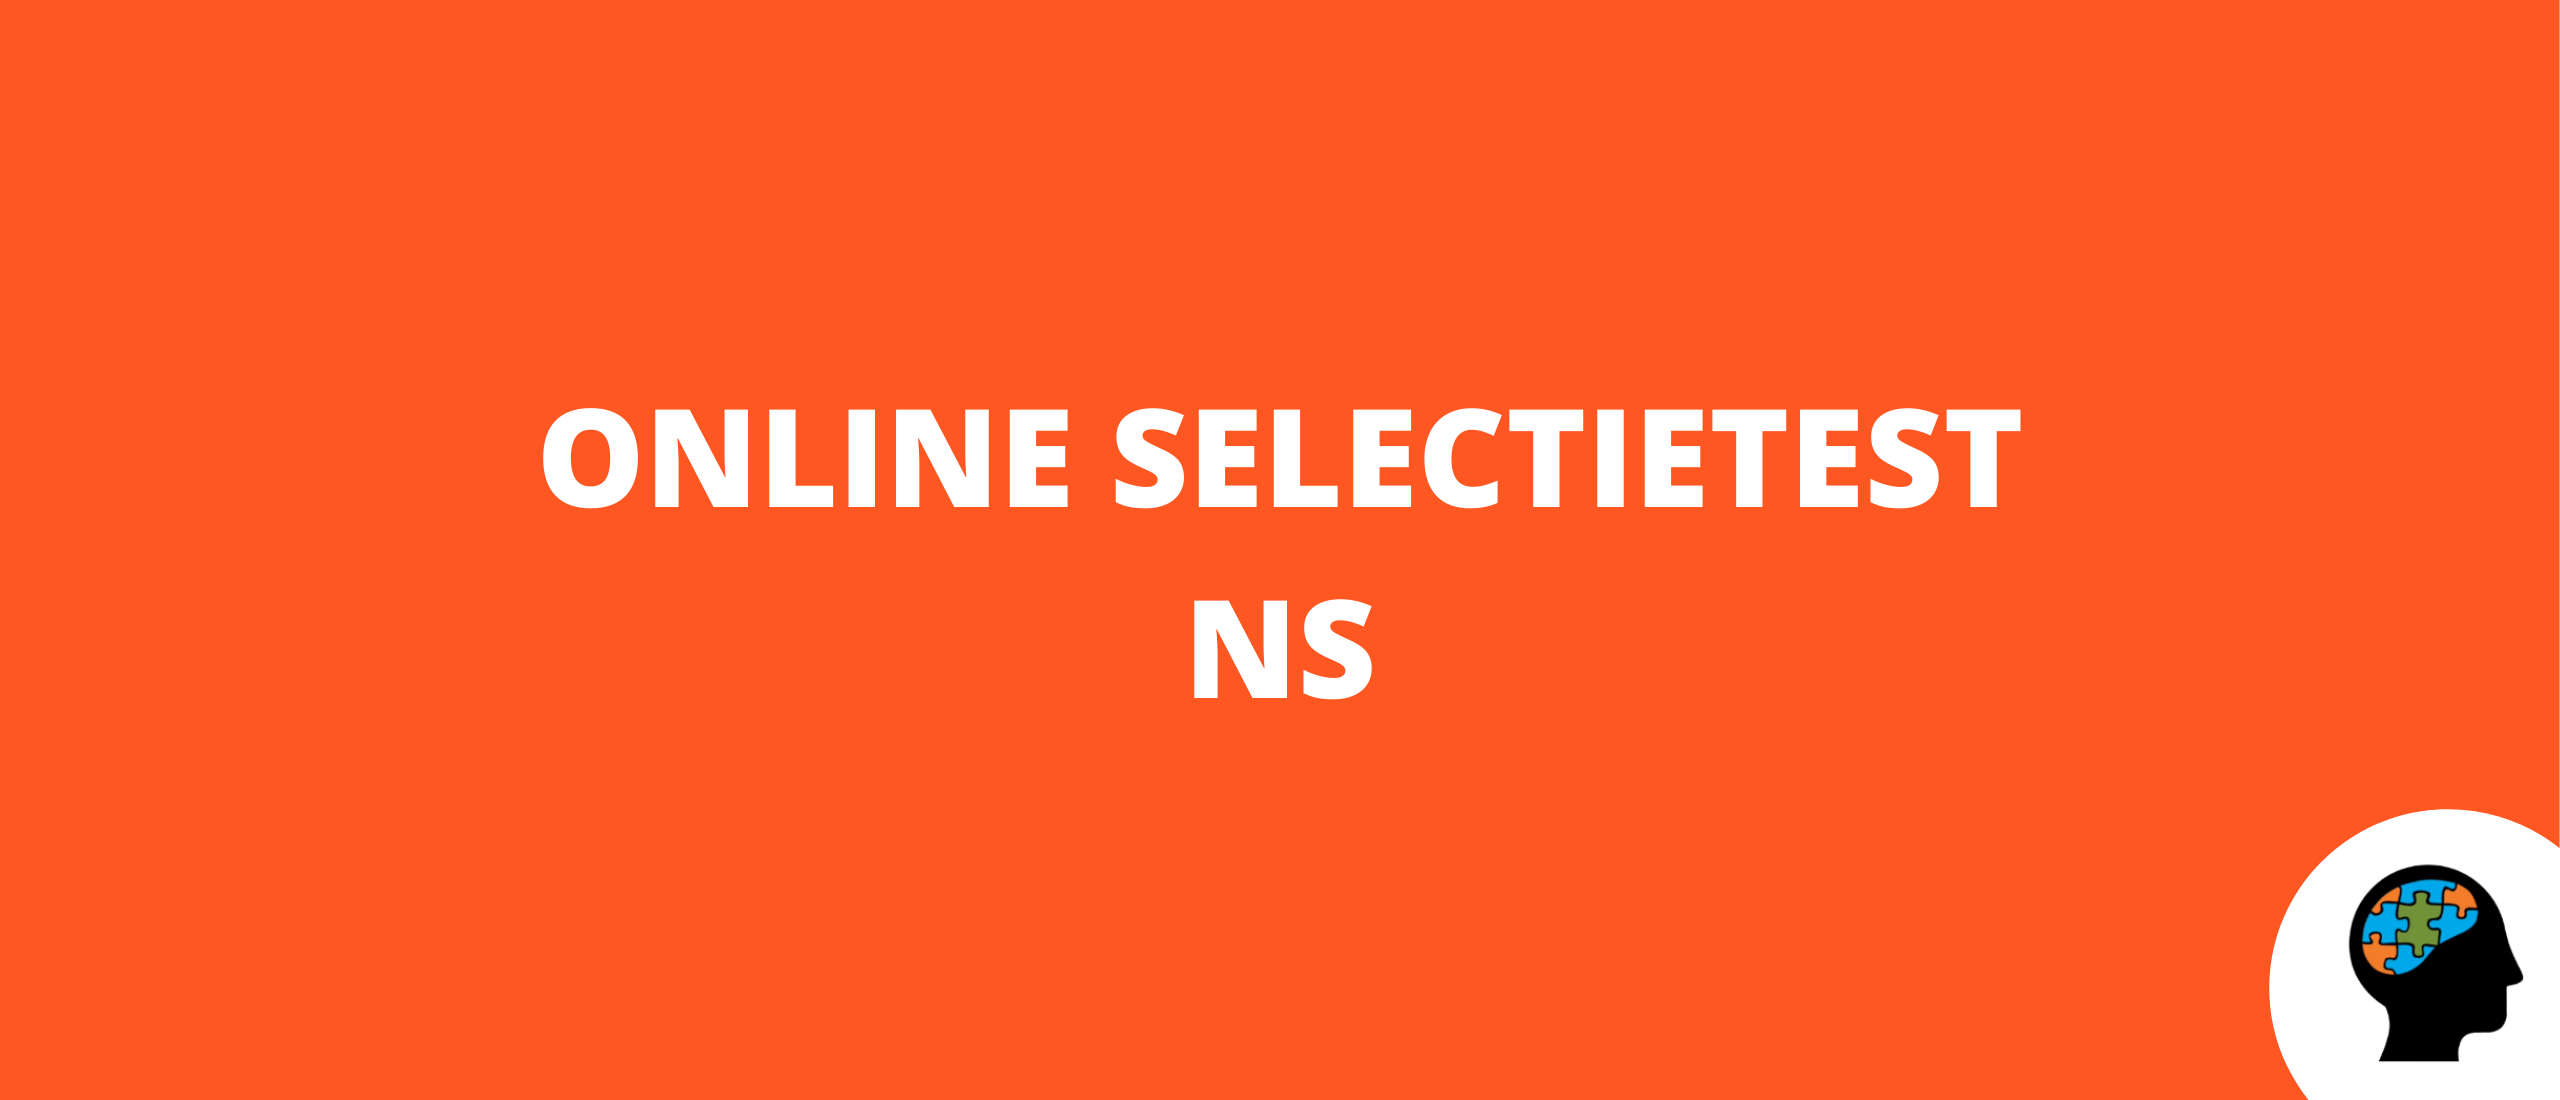 Online selectietest NS